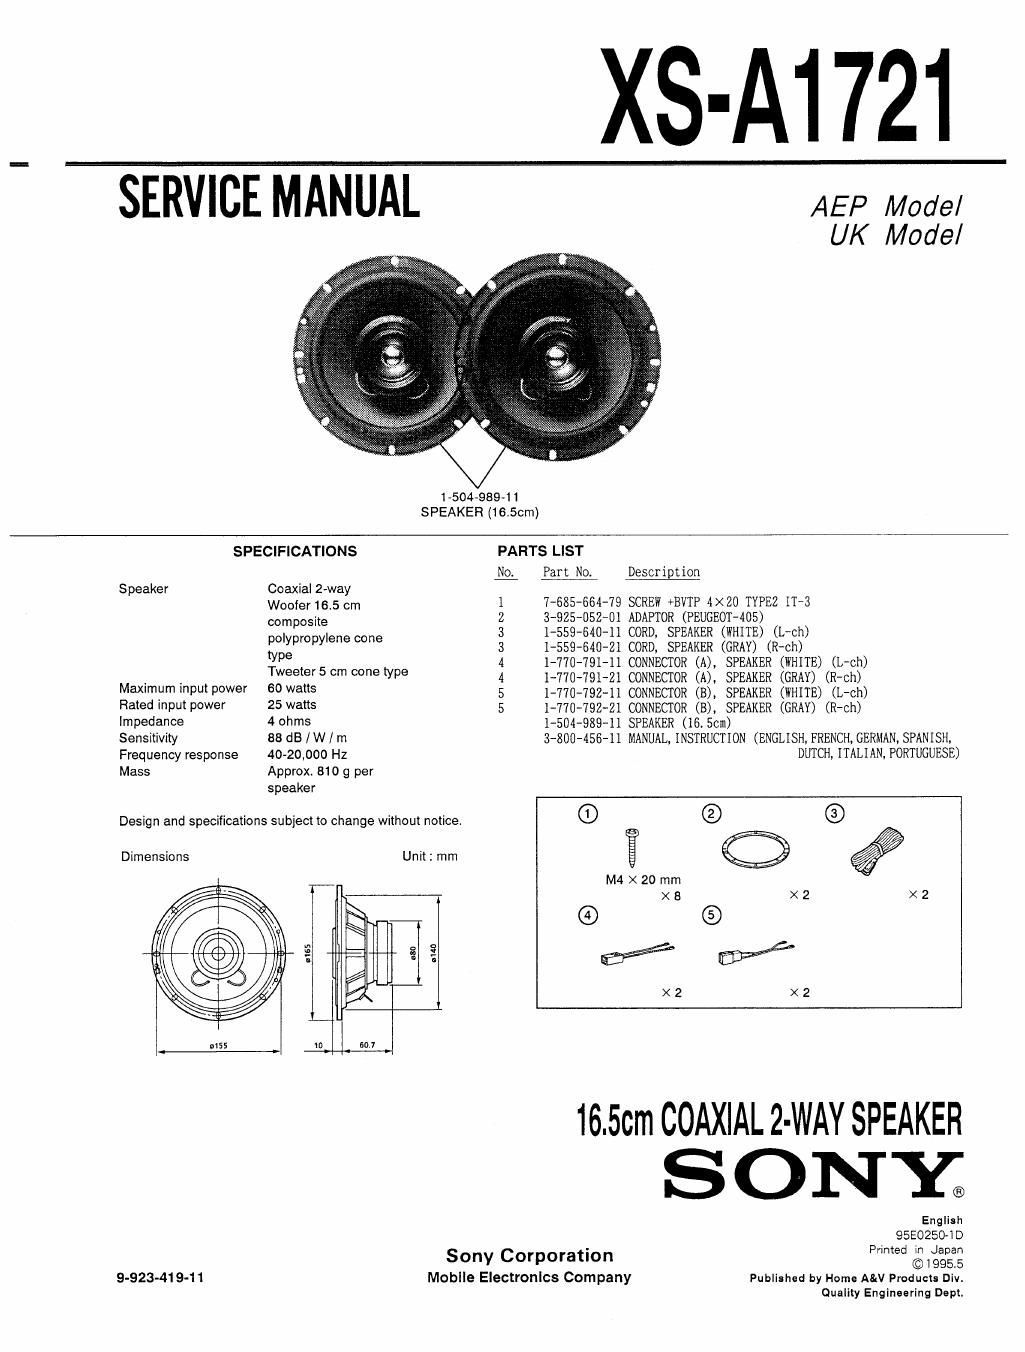 sony xs a 1721 service manual